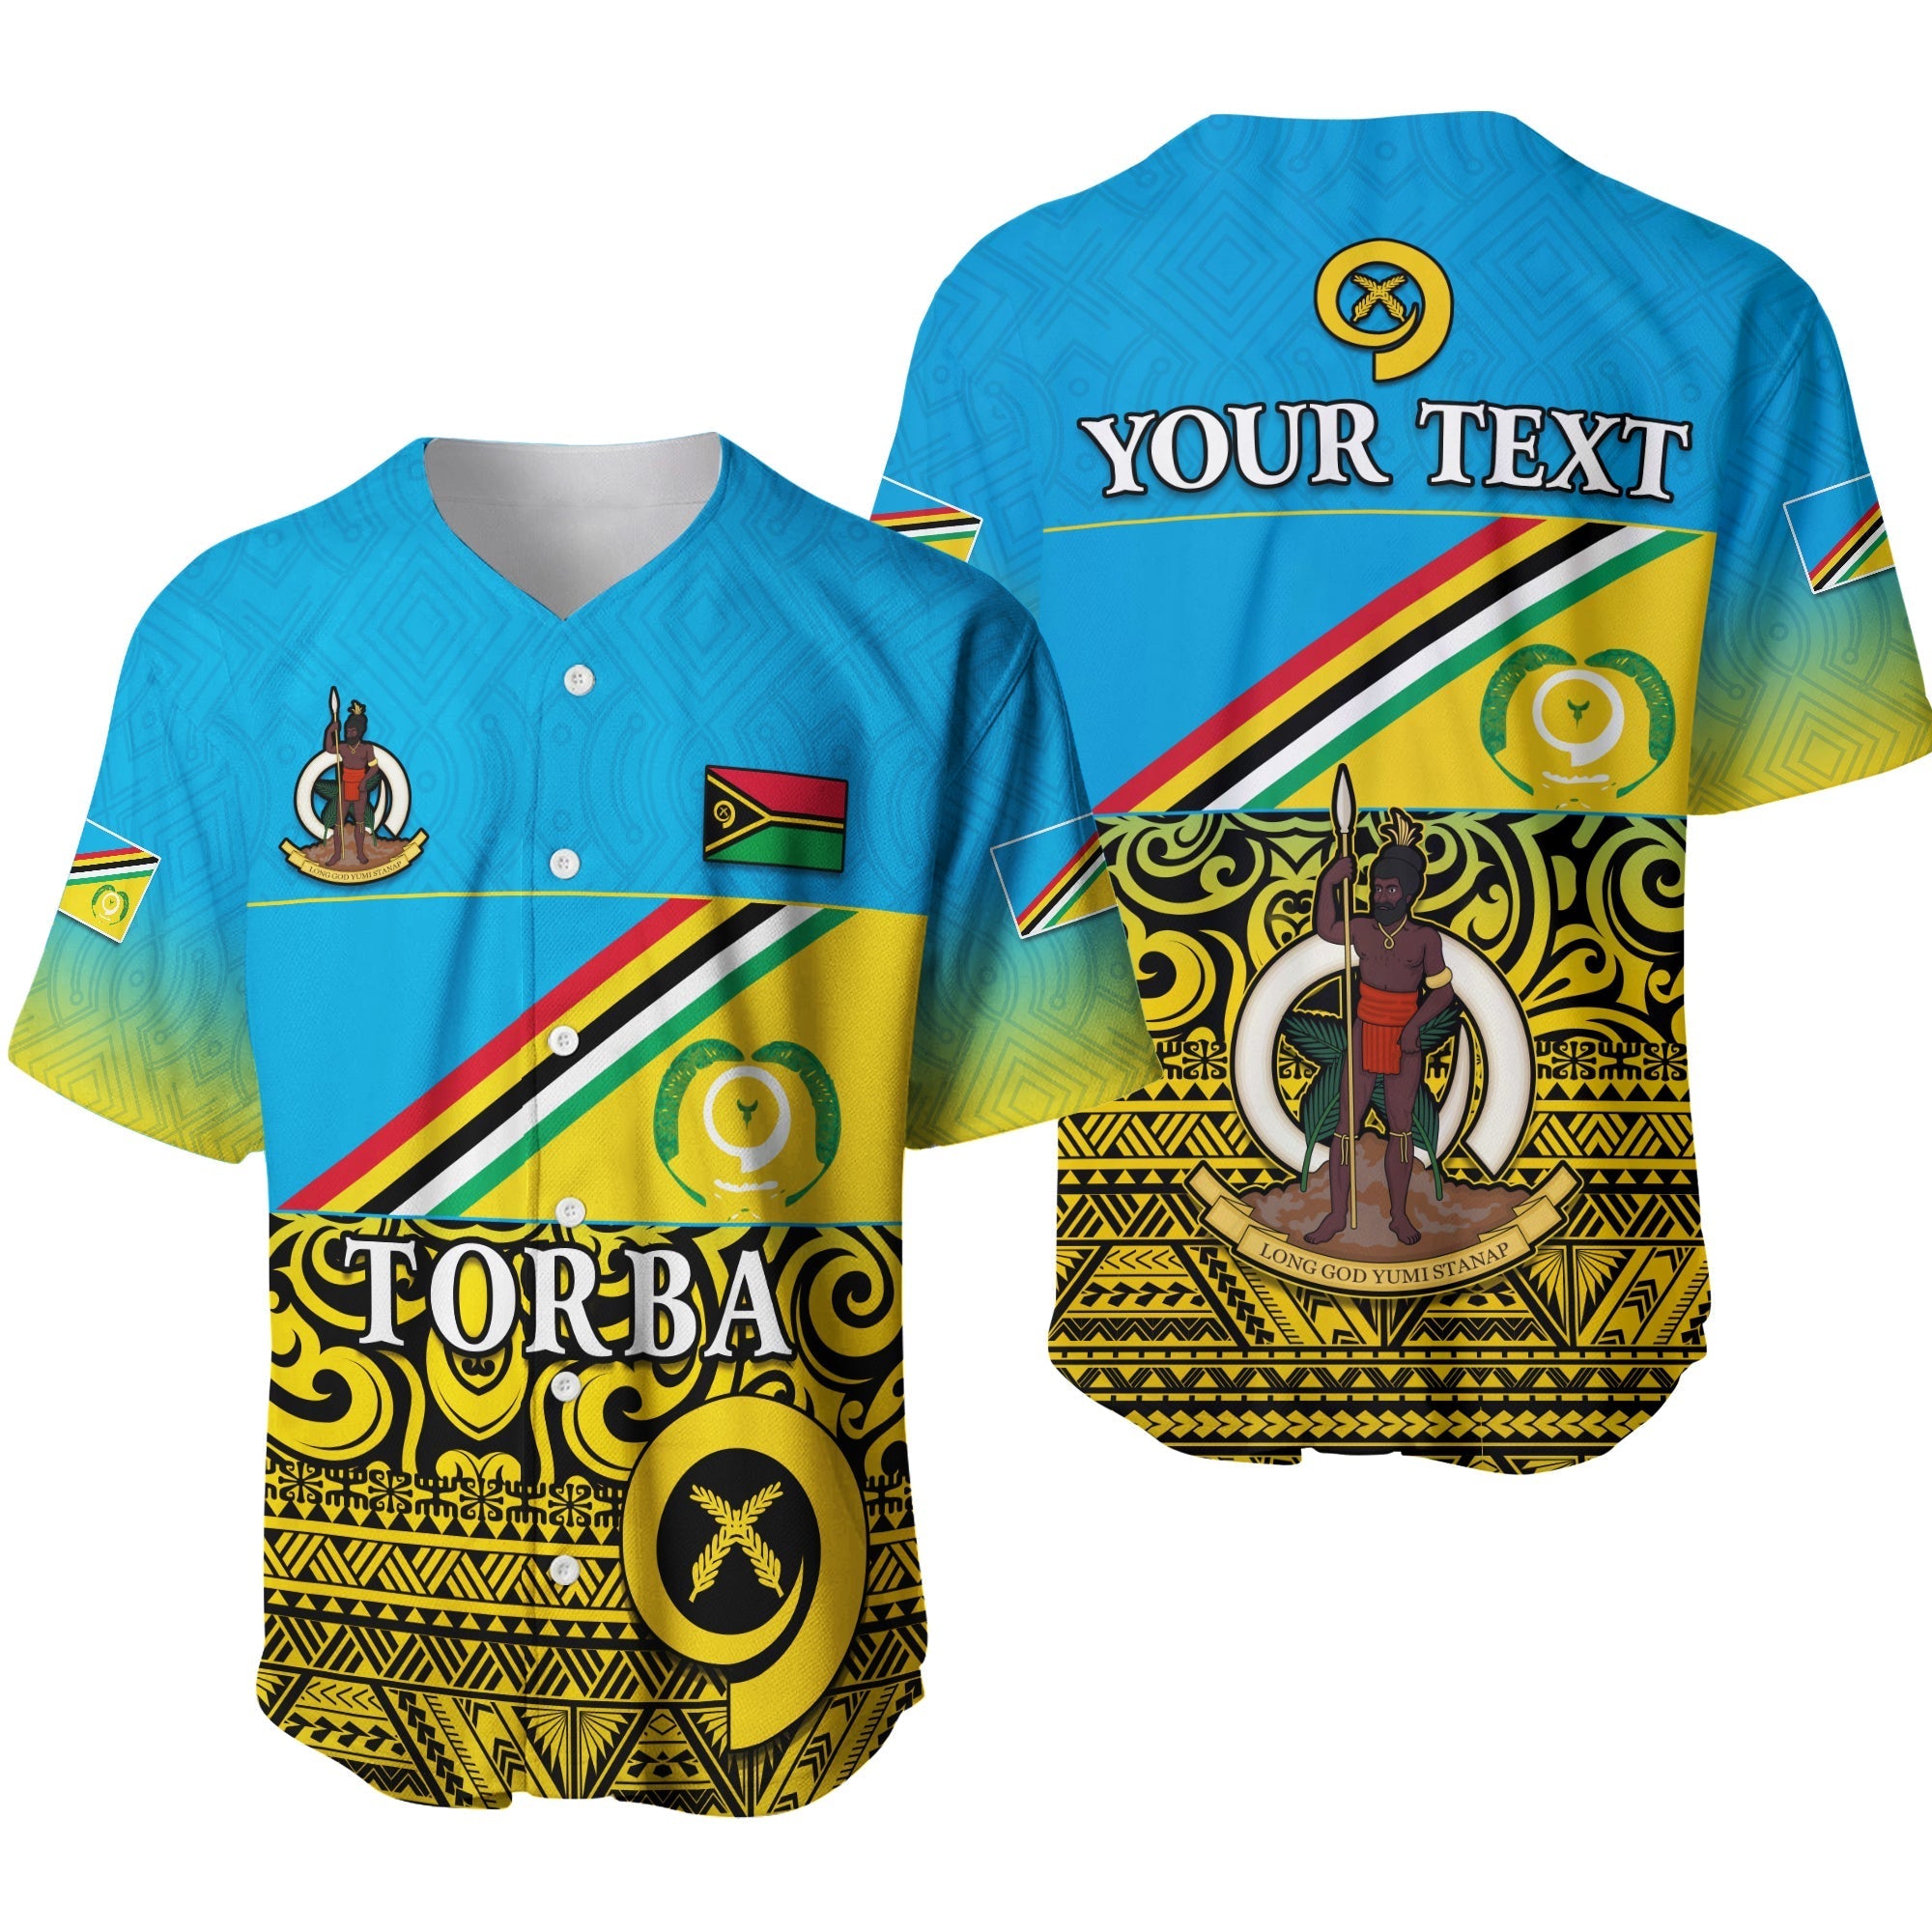 custom-personalised-torba-province-baseball-jersey-vanuatu-proud